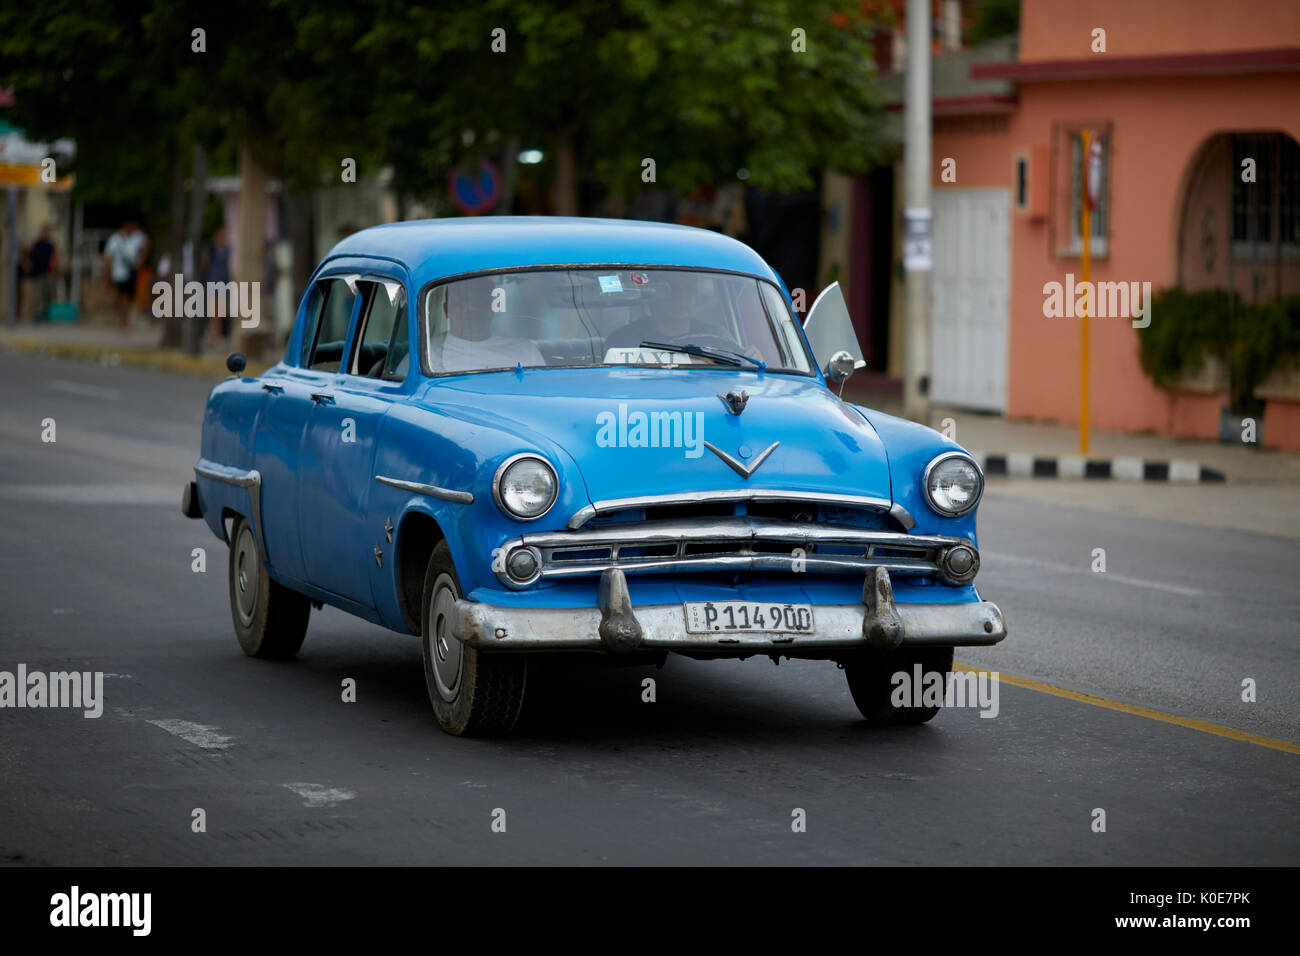 Cuban blue classic car taxi in Varadero, Cuba, a Caribbean island nation under communist rule Stock Photo